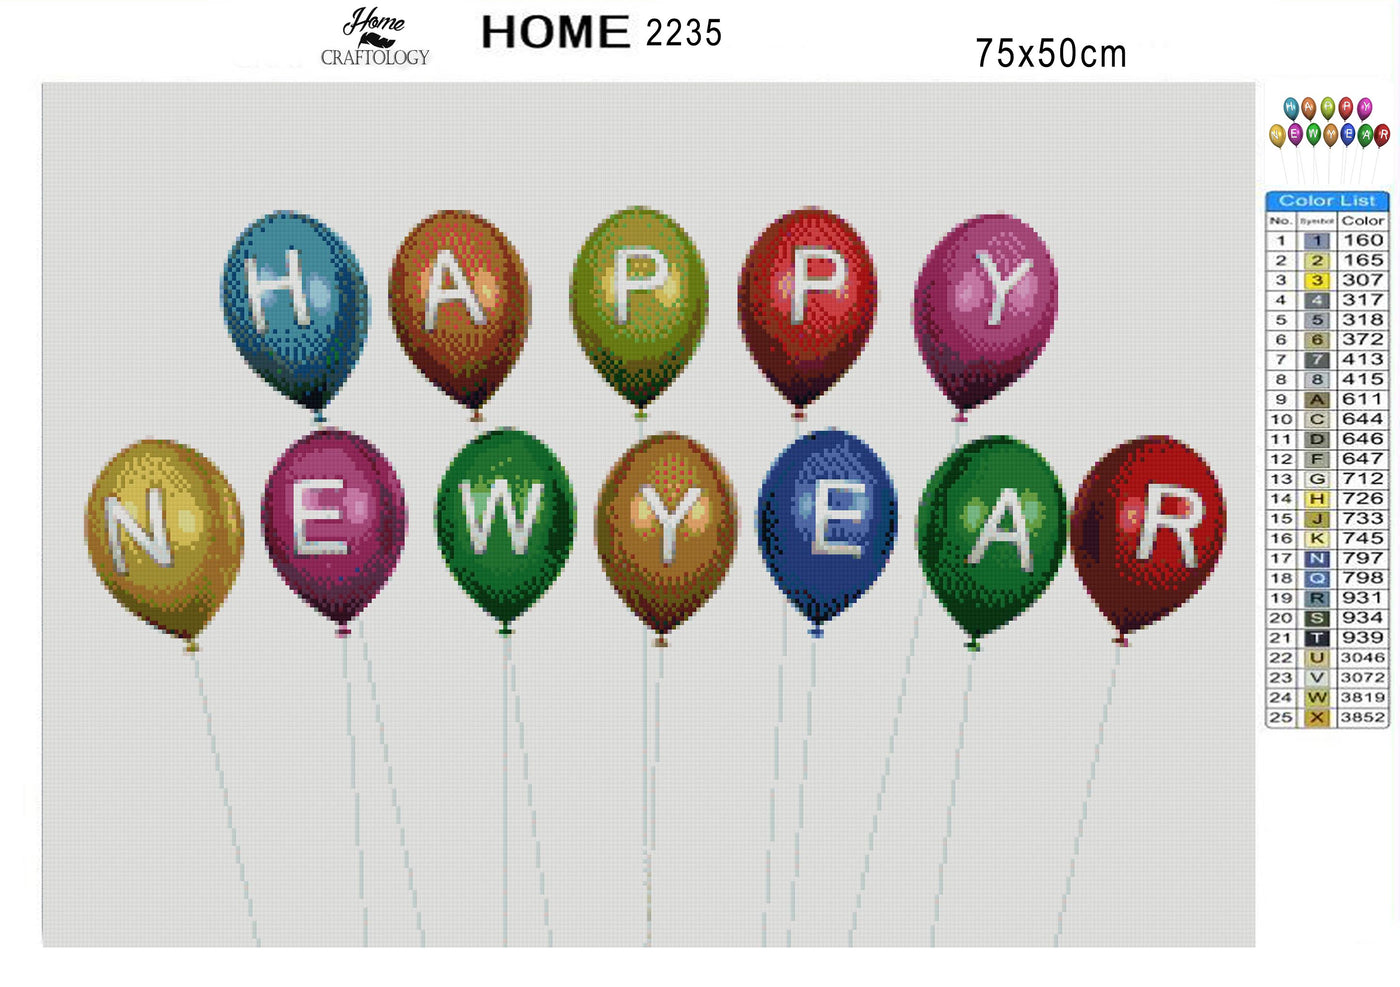 New Year Balloons - Premium Diamond Painting Kit